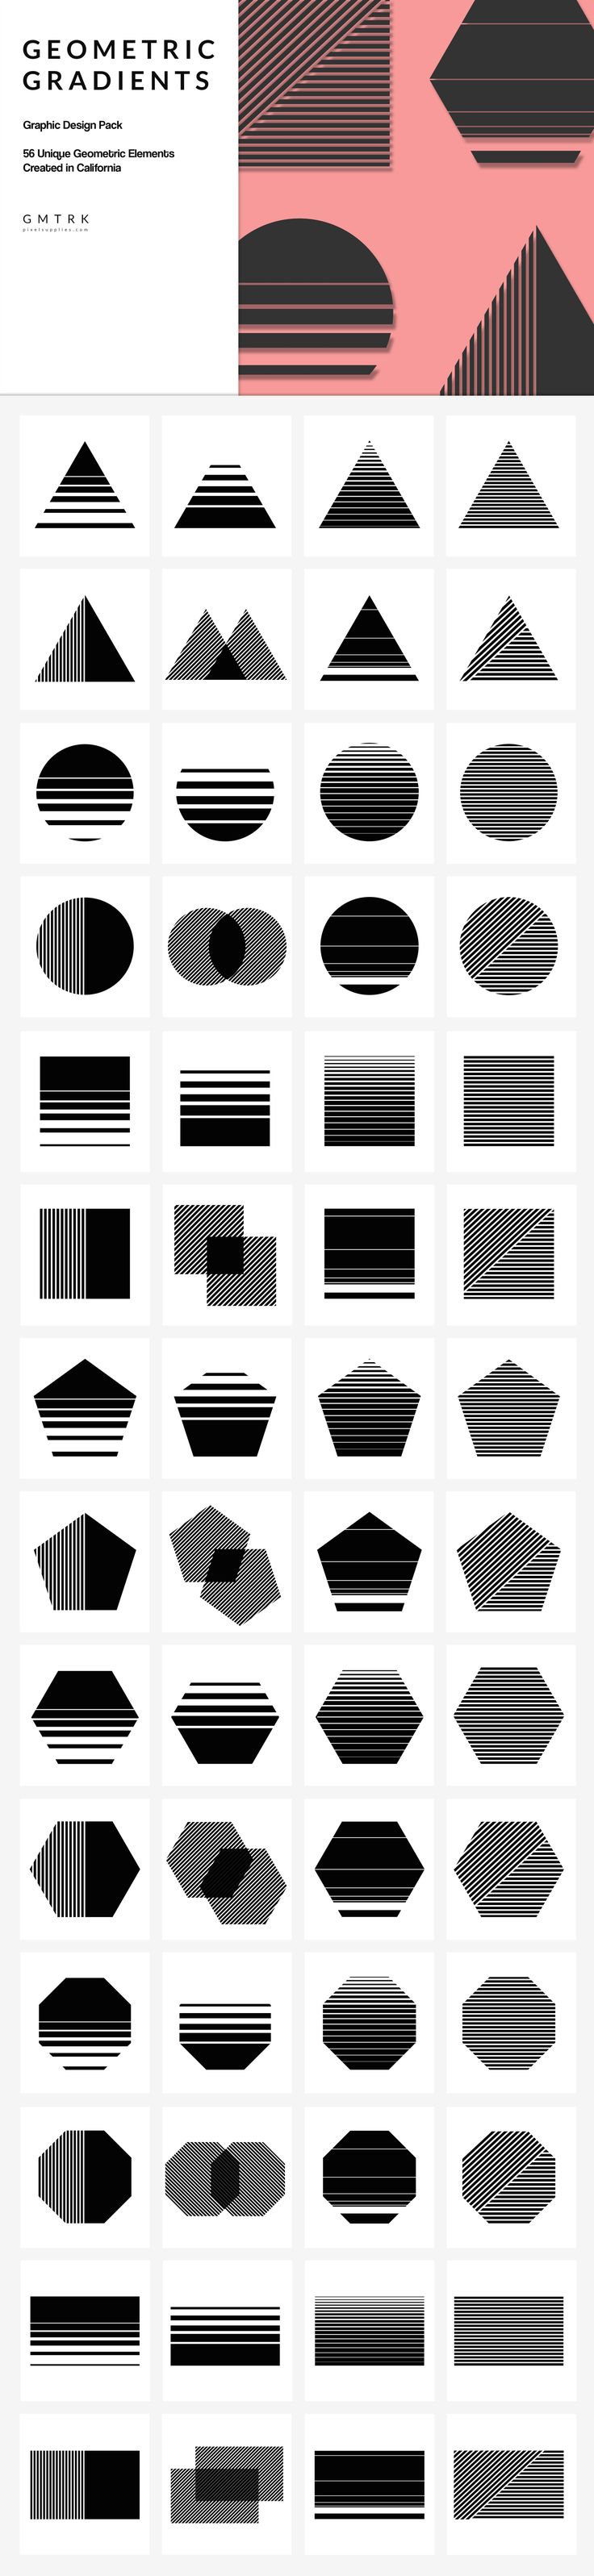 Geometric Gradients by Pixel Supplies on Creative Market